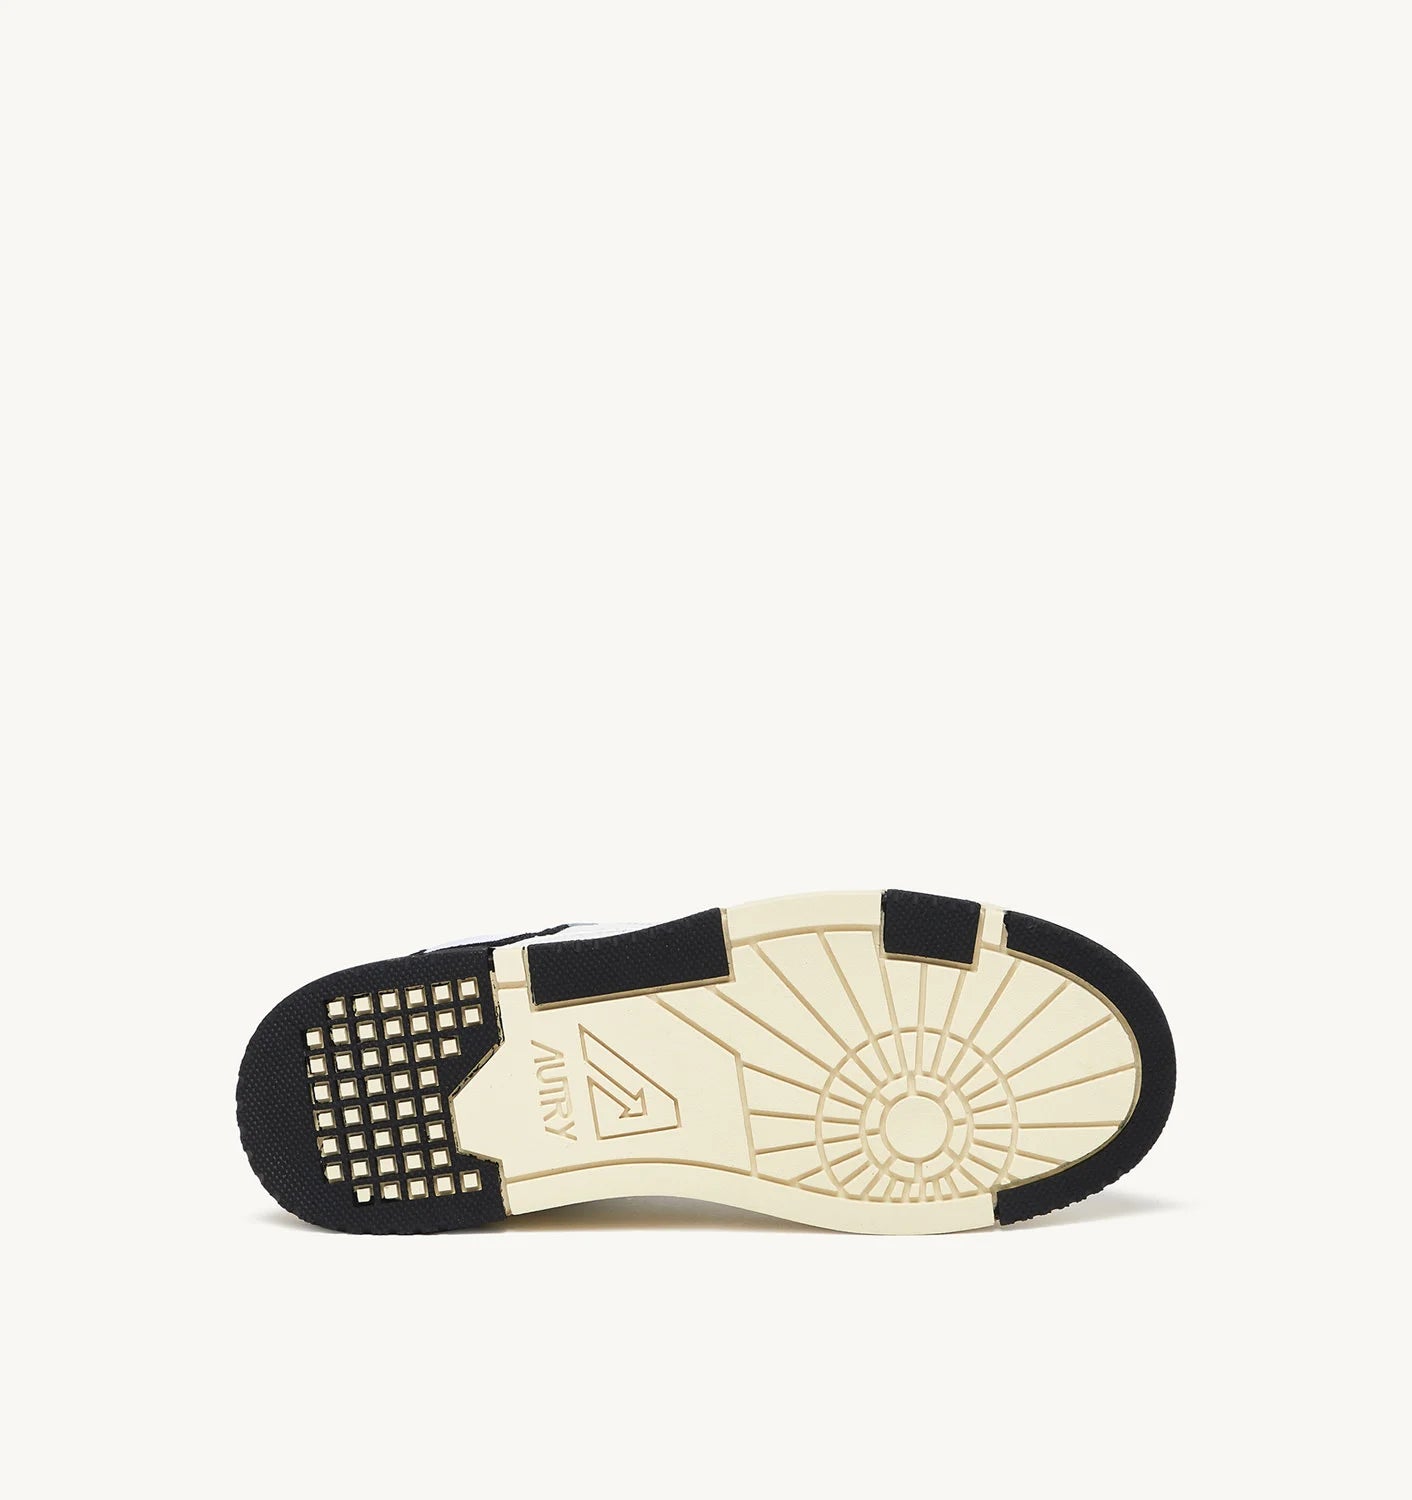 Autry Sneakers Uomo Clc ROLM-MM04 White/Black